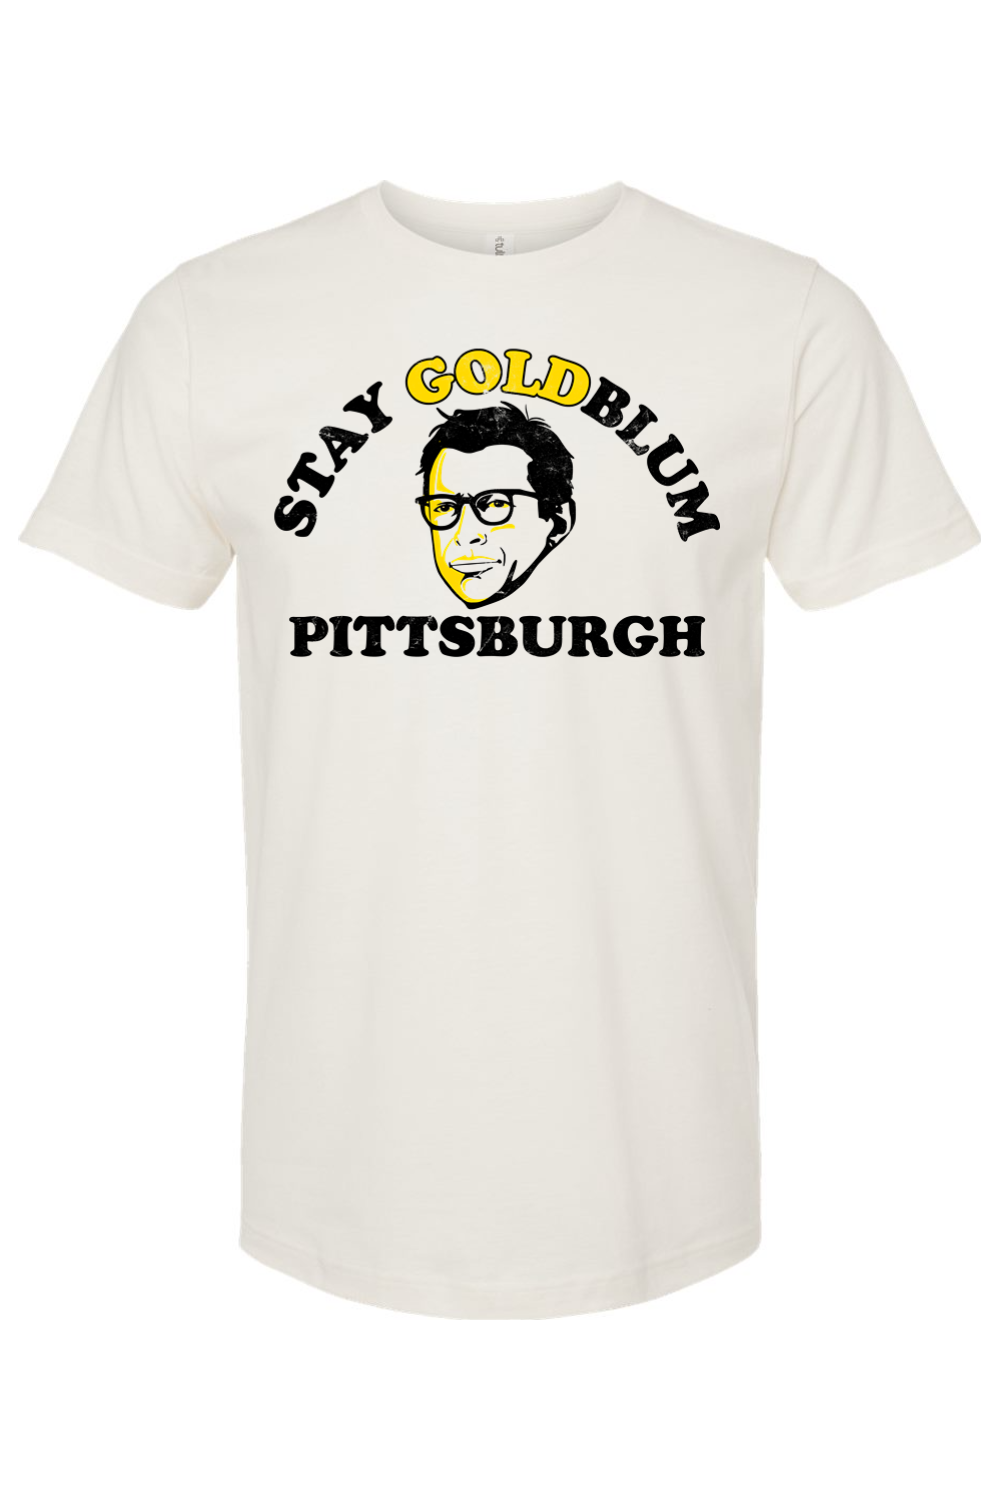 Stay Goldblum Pittsburgh